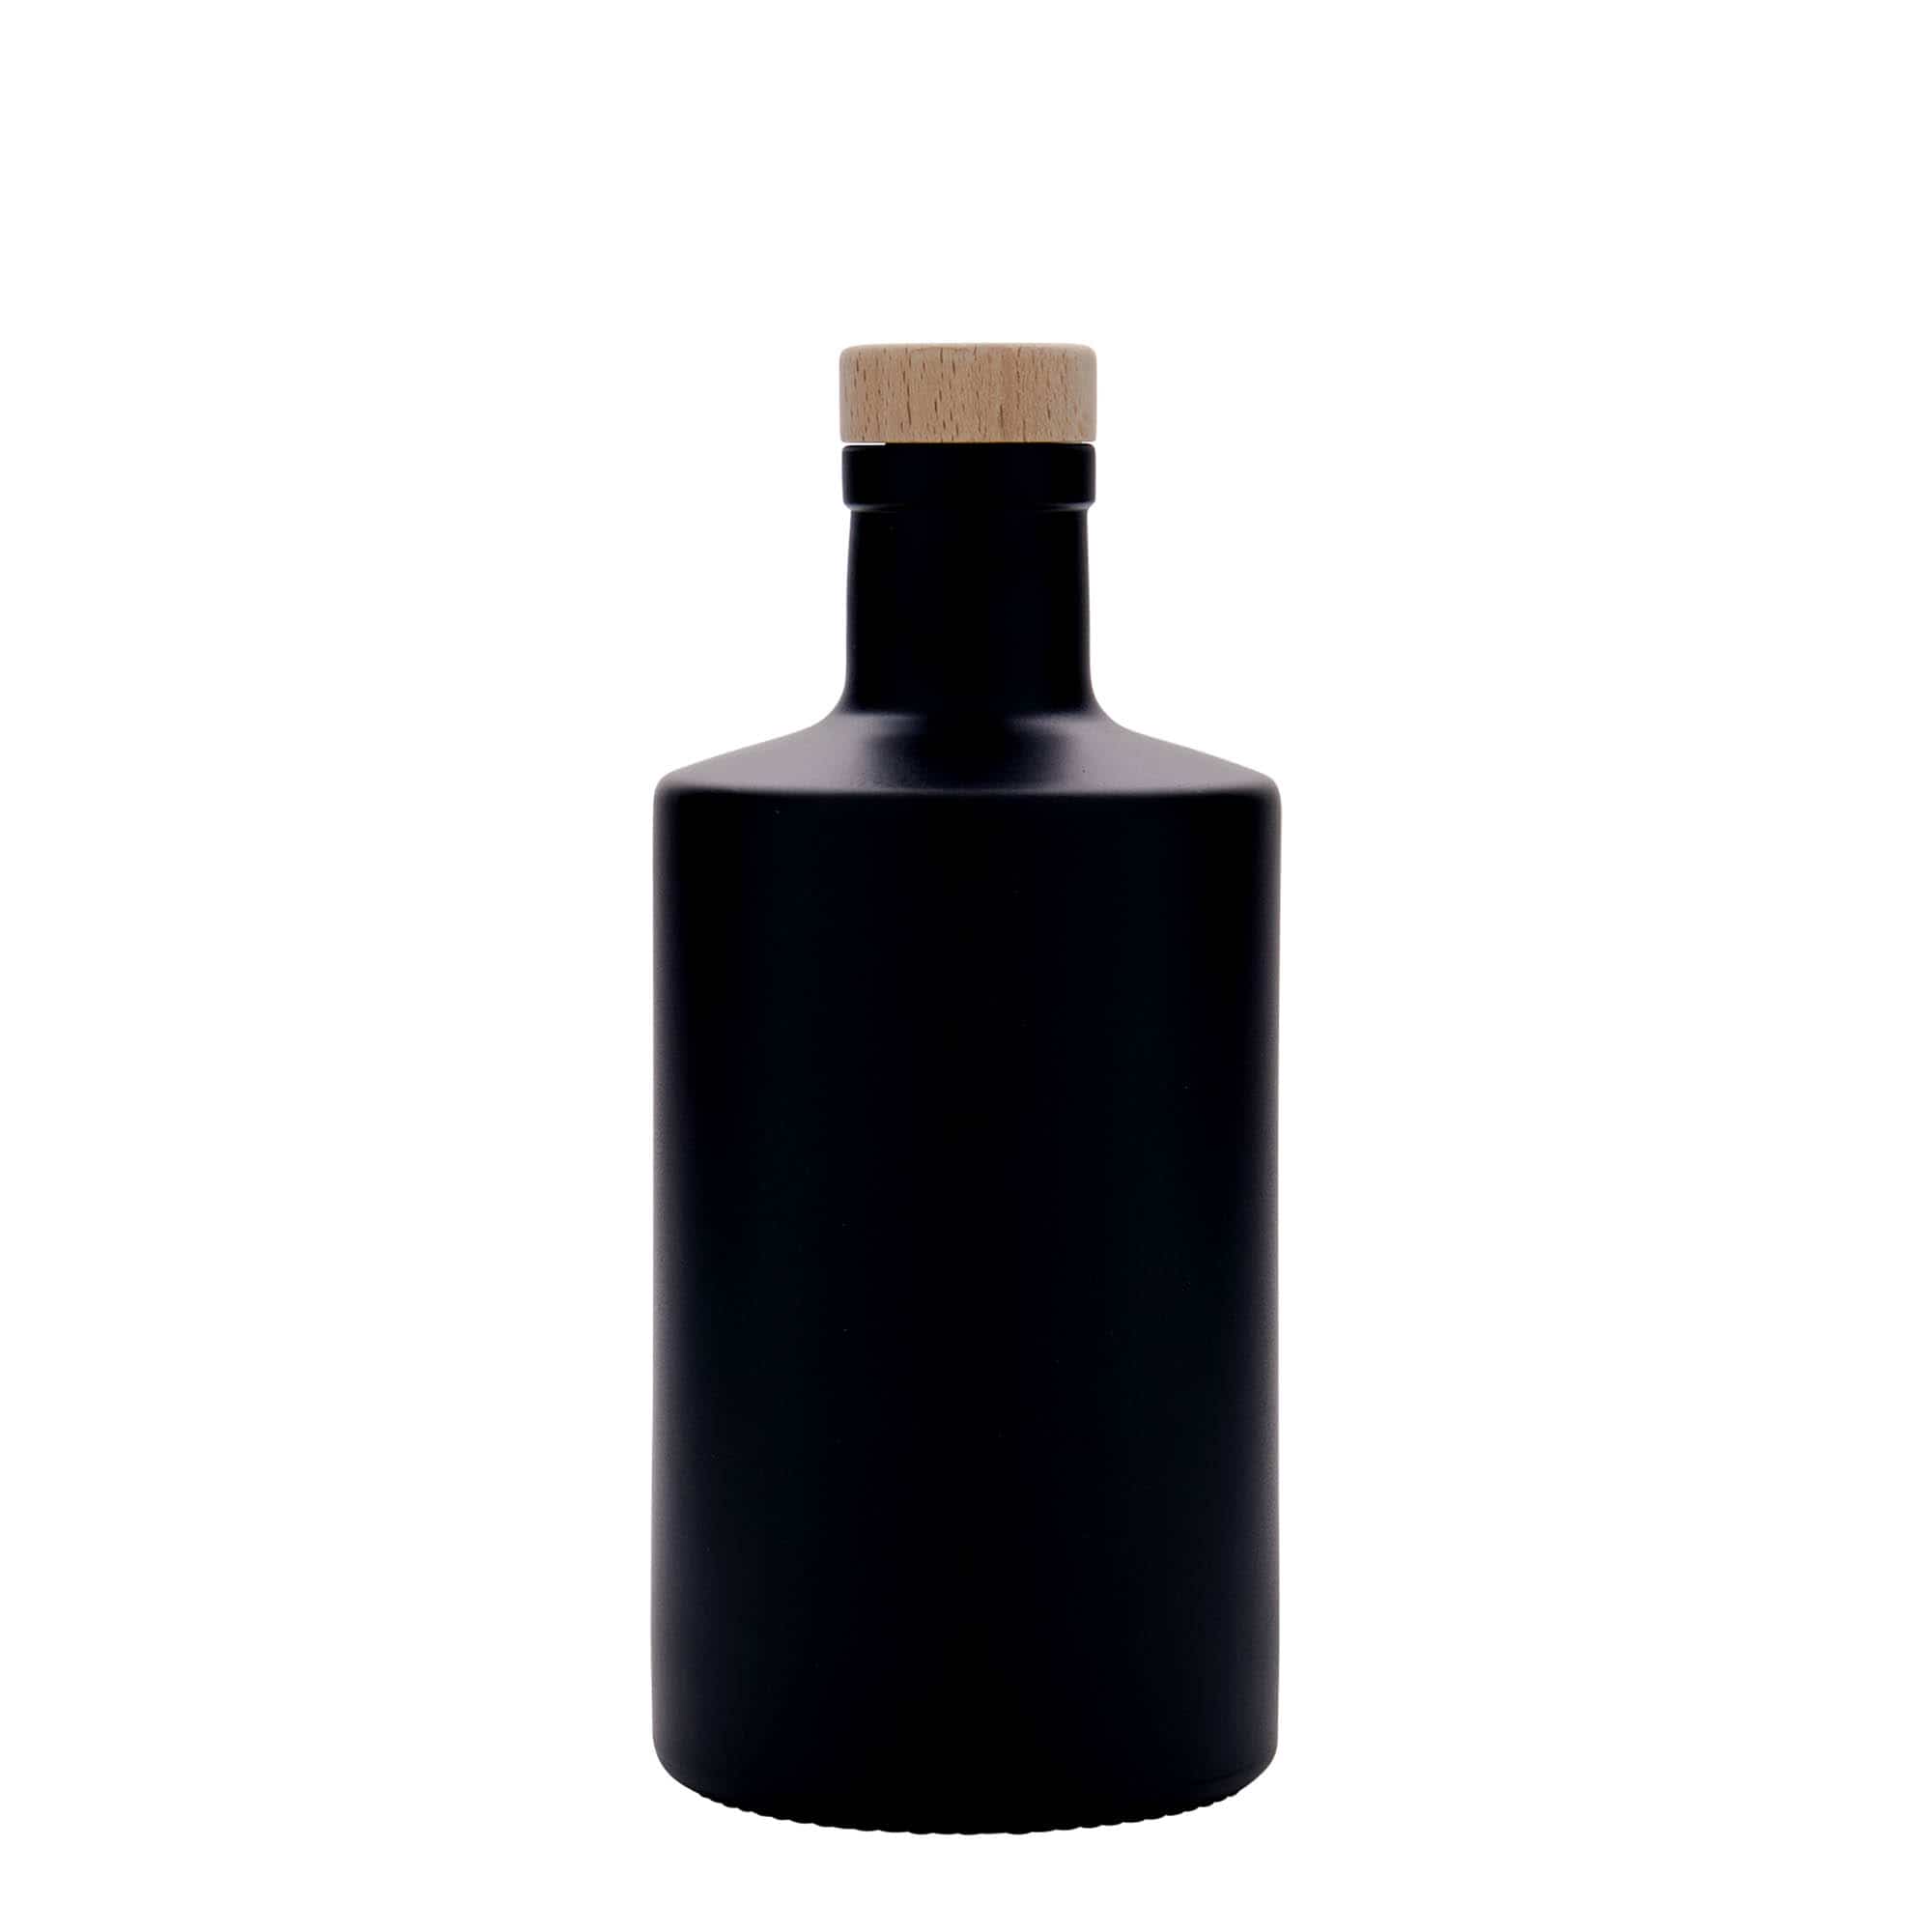 500 ml glass bottle 'Caroline', black, closure: cork